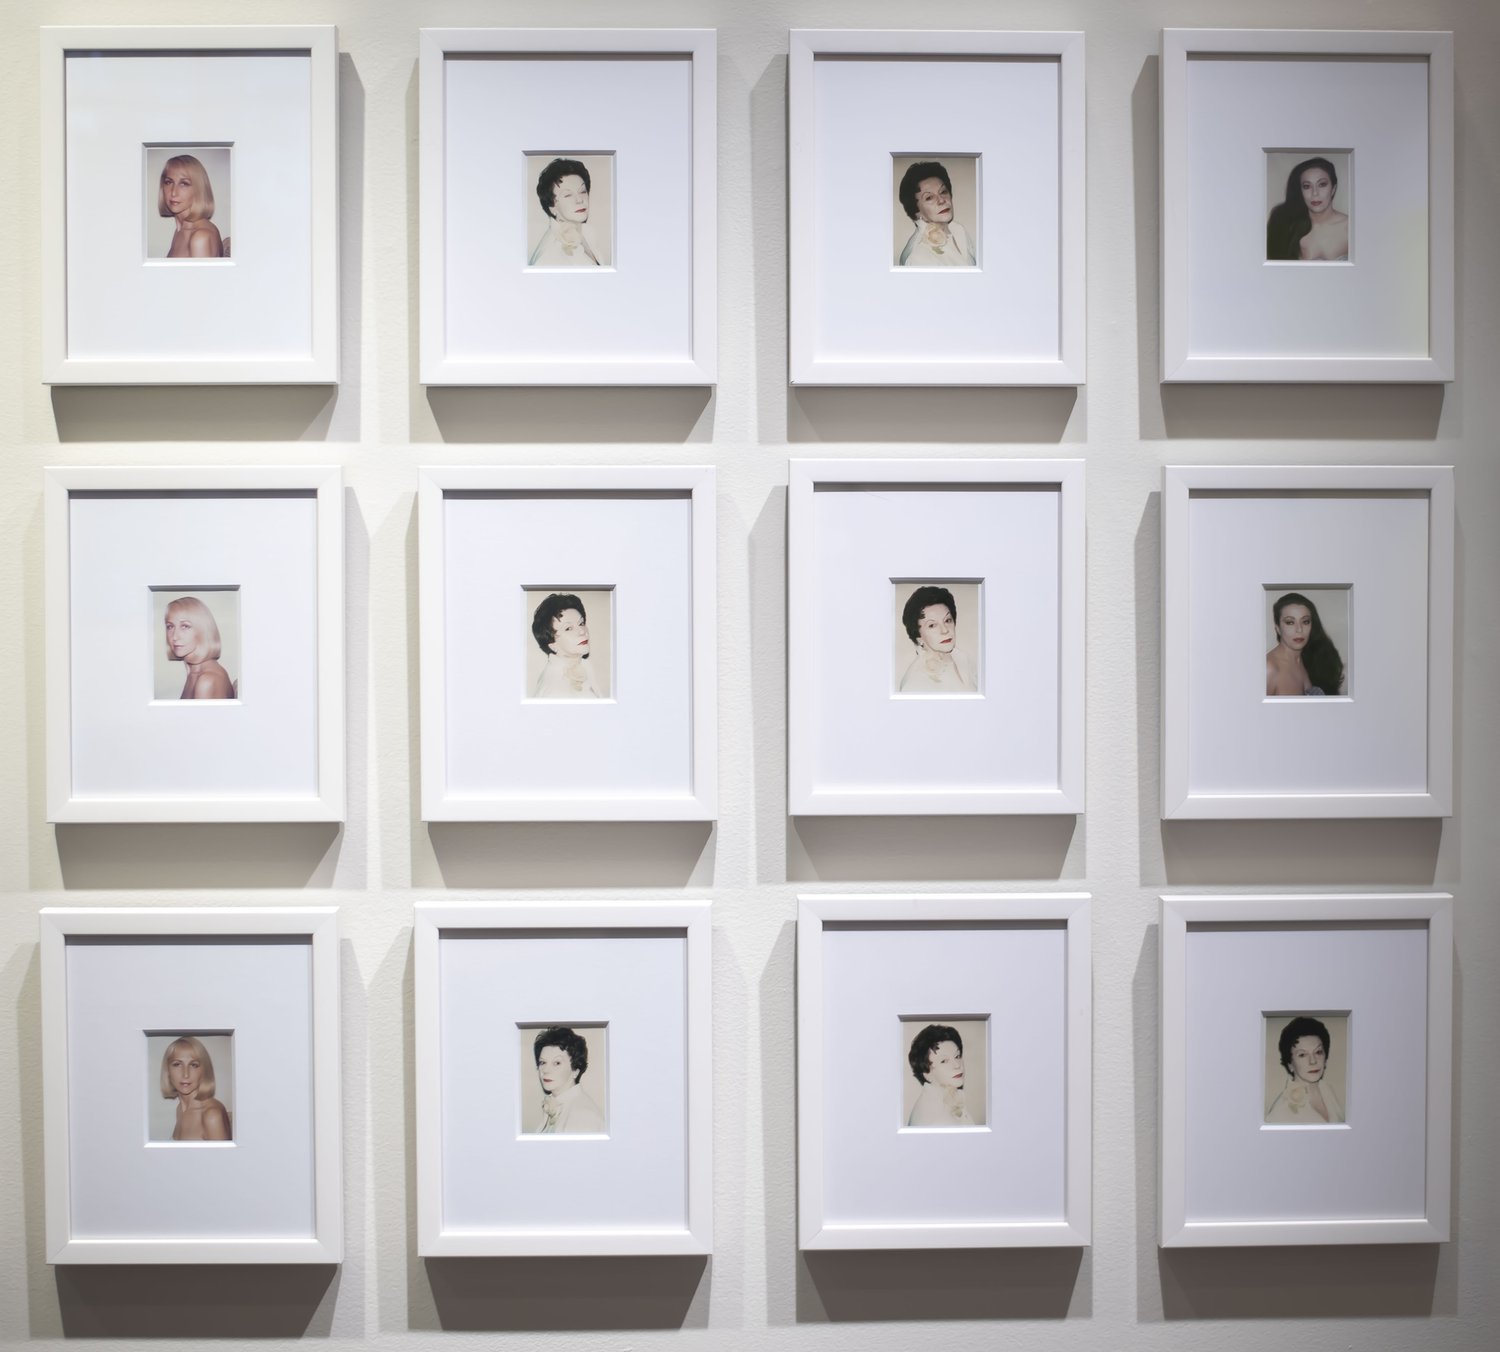 Exhibit: POP-UP: Andy Warhol & The Portrait Impulse